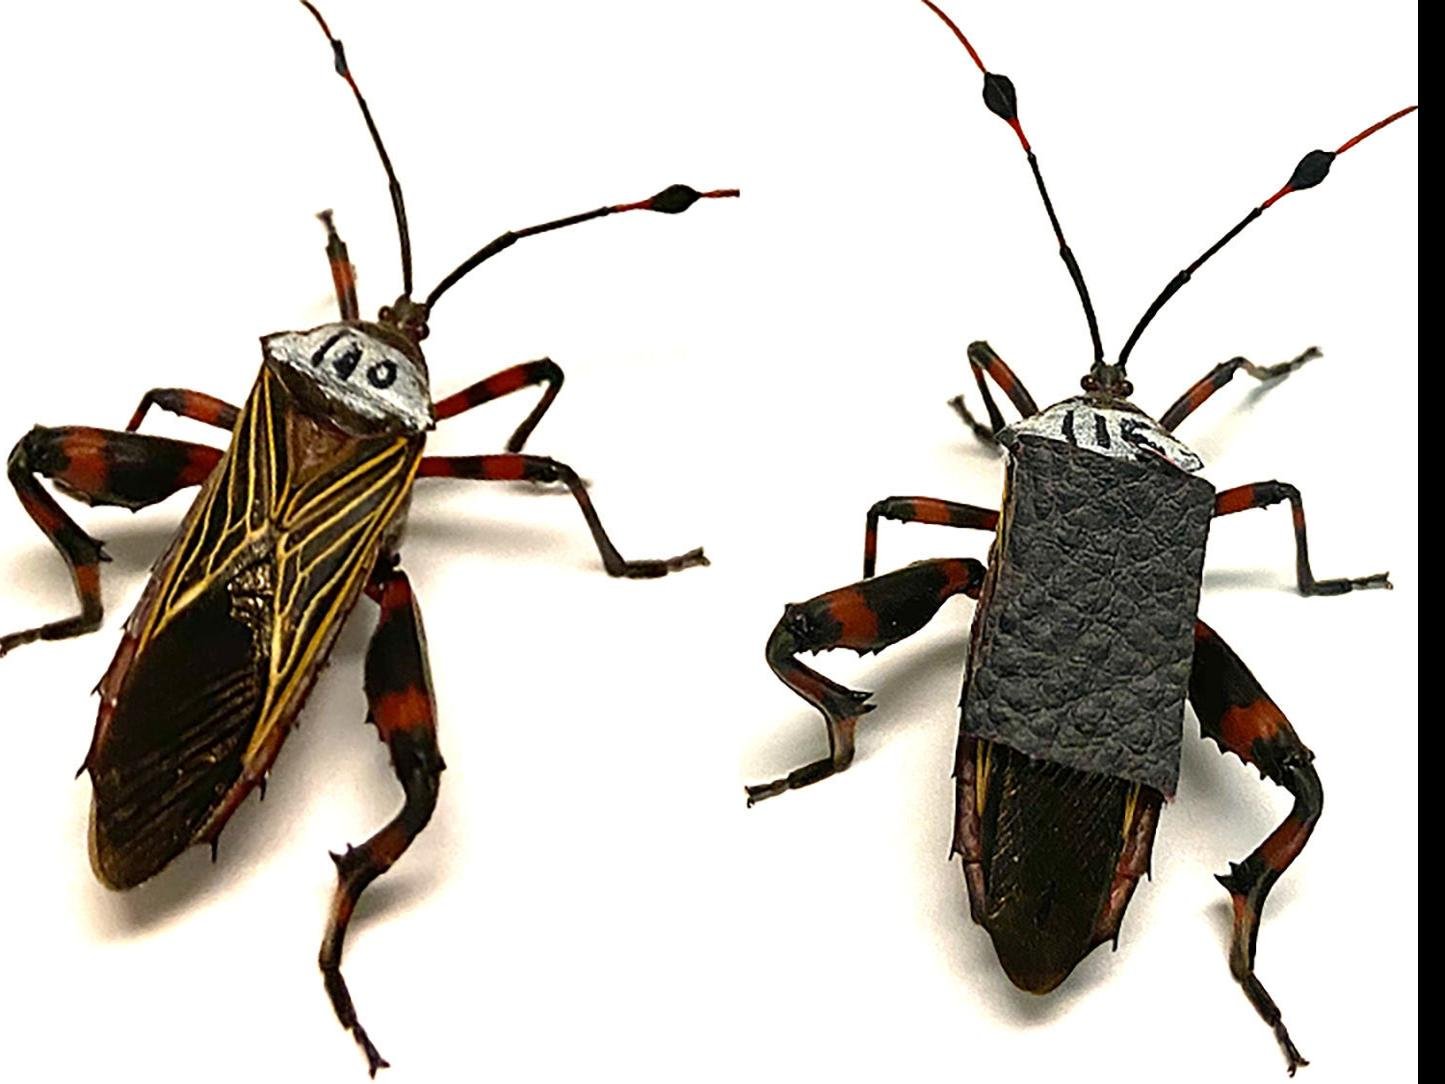 Bugs Brawl In Glass Jars For University Of Arizona Research Local News Tucson Com - brawl stars store bug